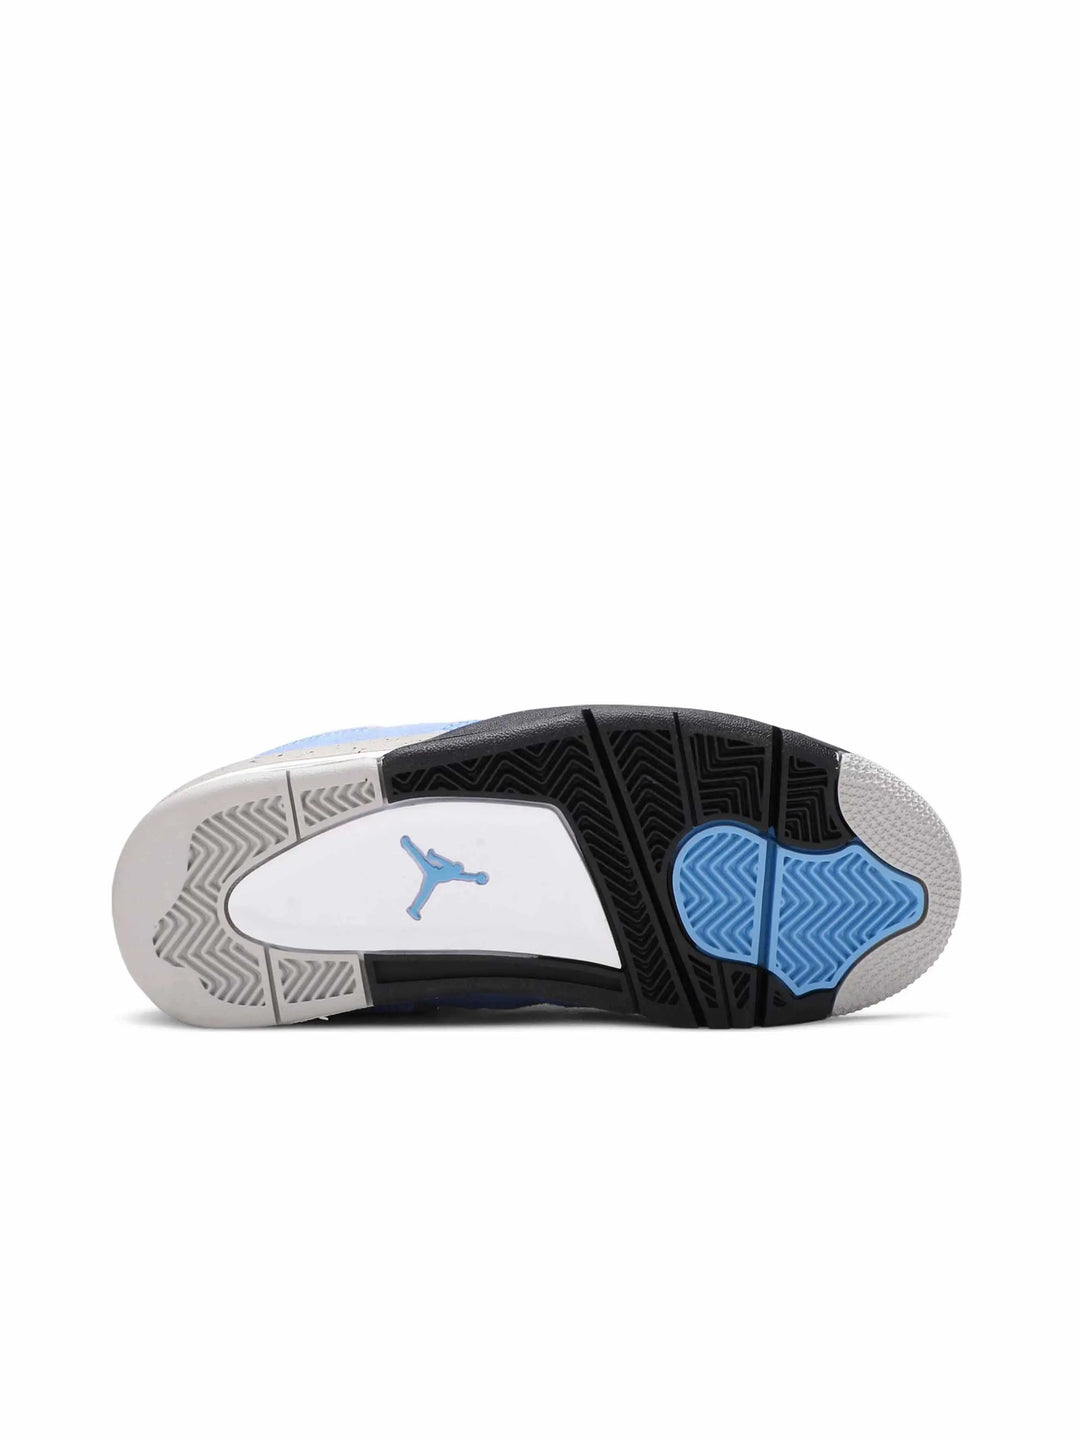 Nike Air Jordan 4 Retro University Blue (GS) in Melbourne, Australia - Prior